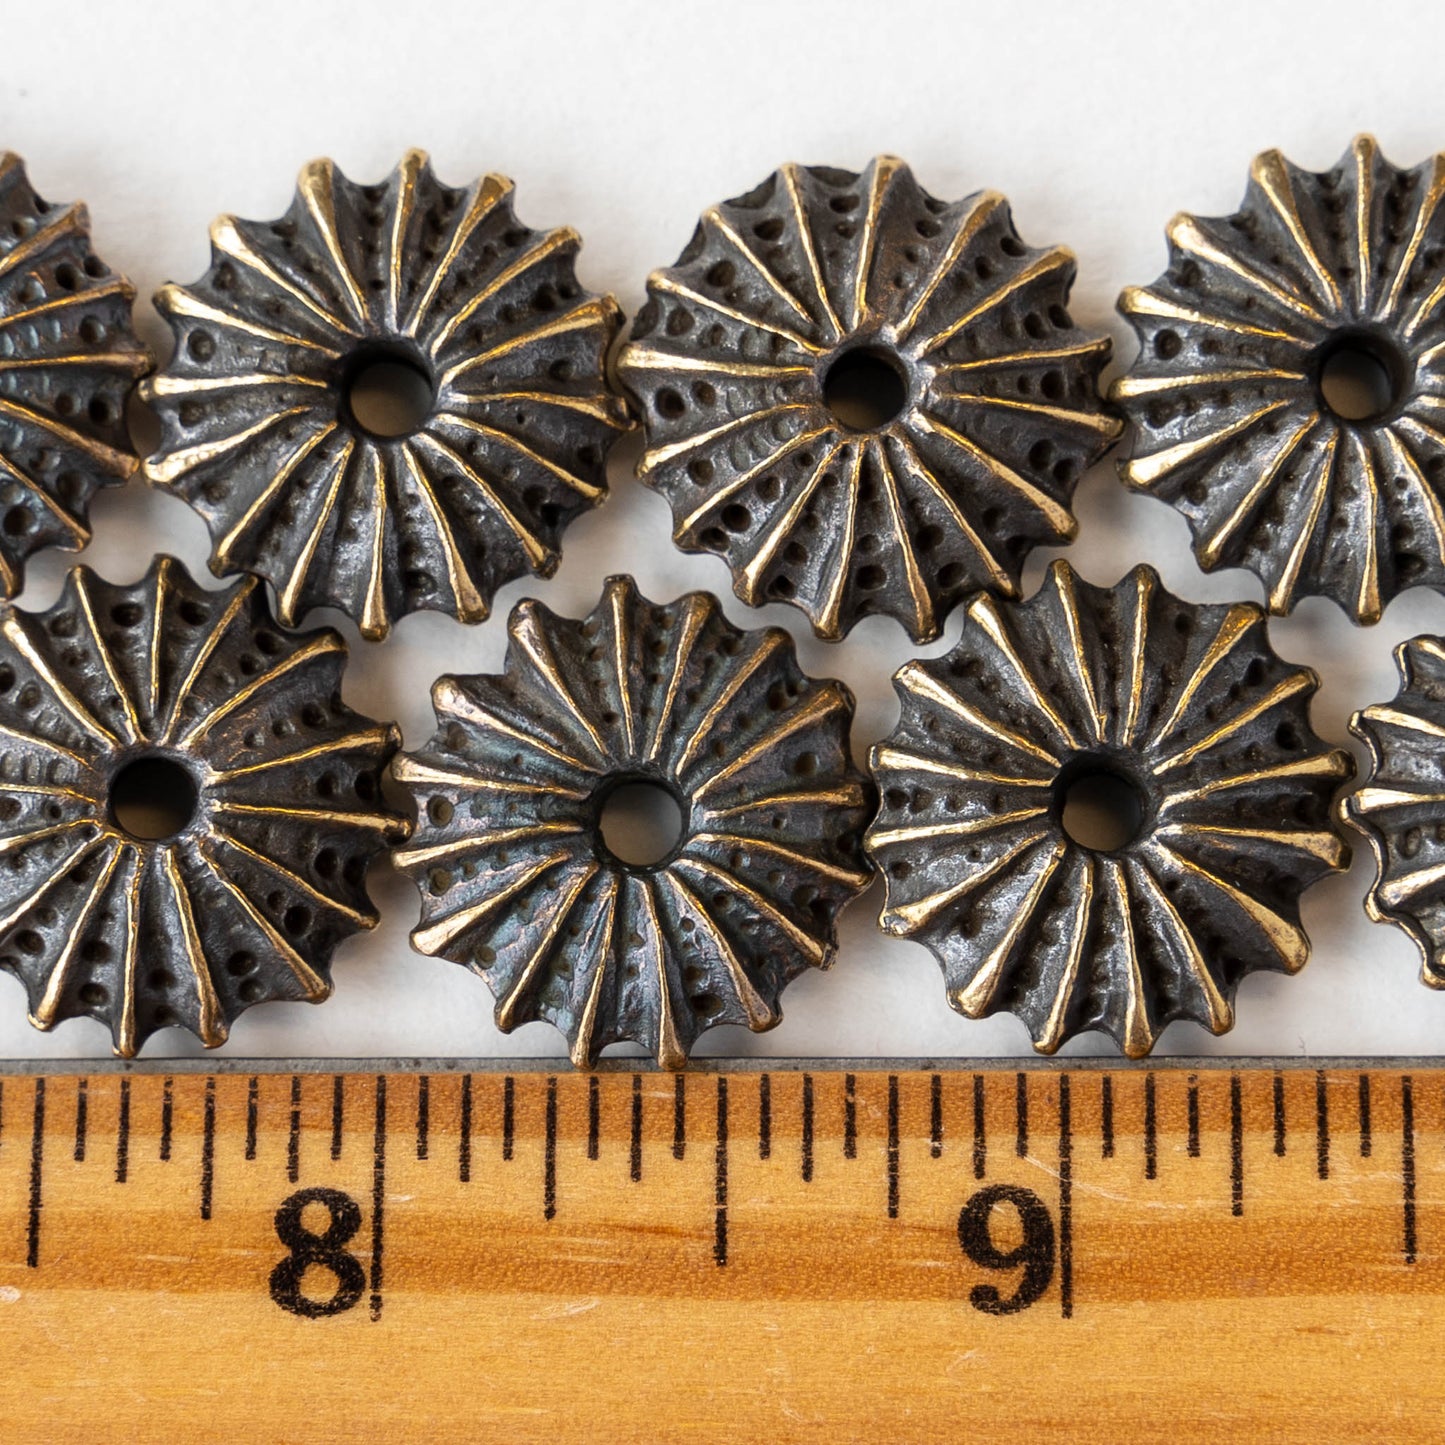 19mm Mykonos Metal Flat Sea Urchin Beads - Antique Brass - Choose Amount